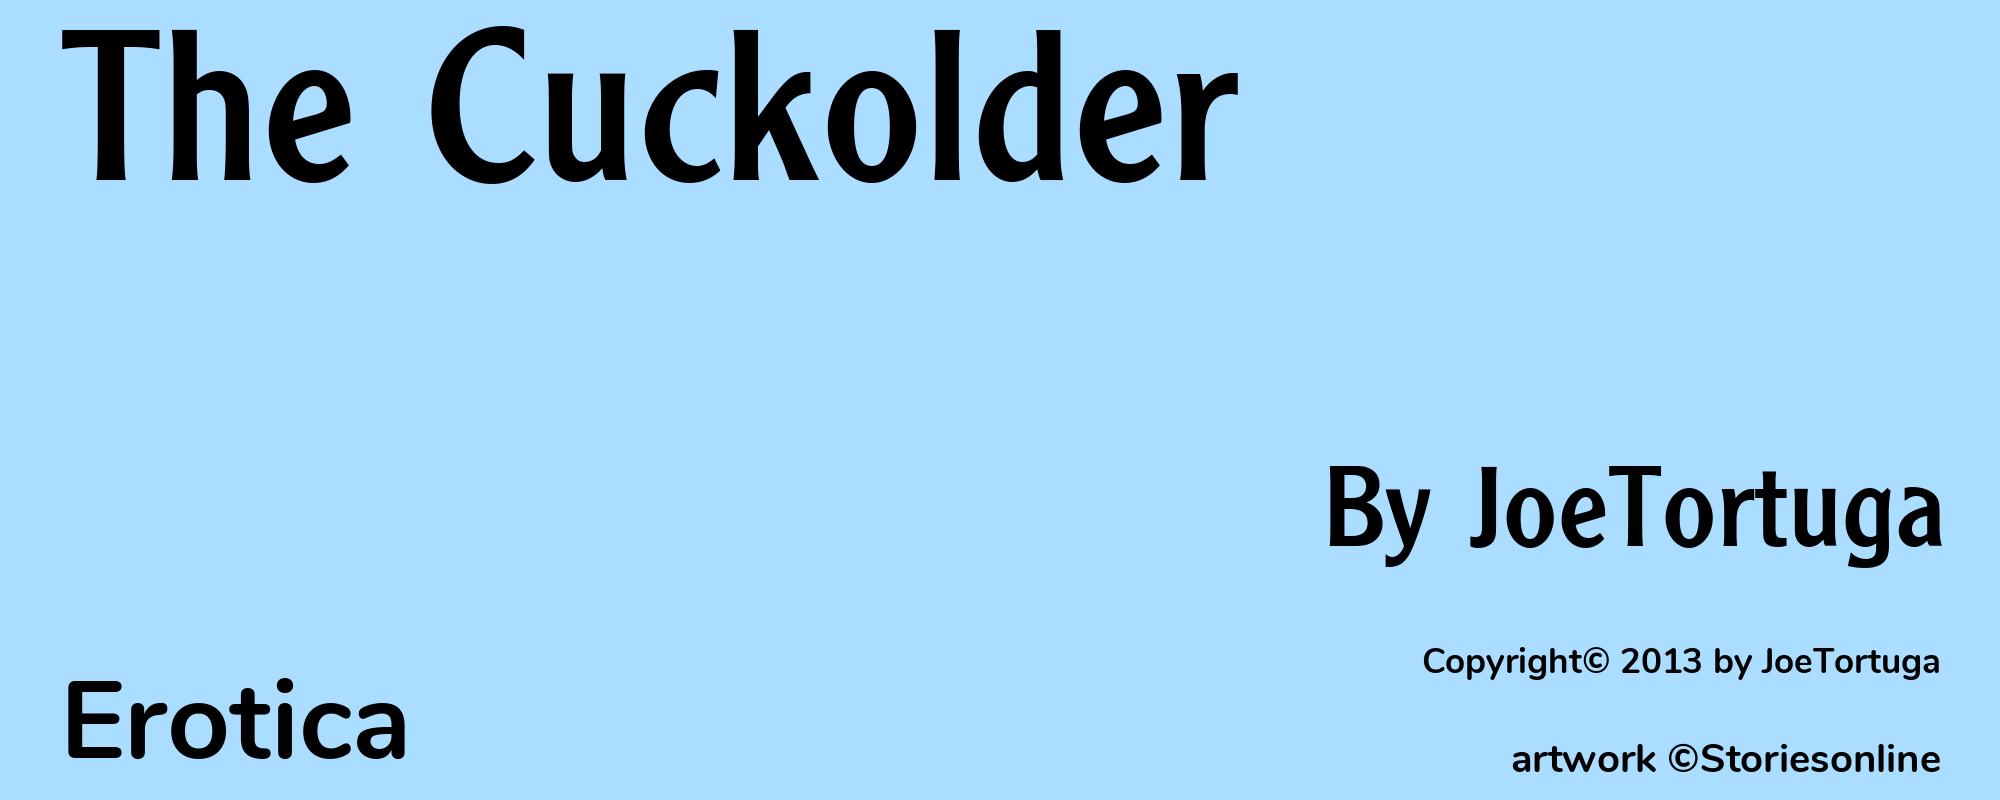 The Cuckolder - Cover